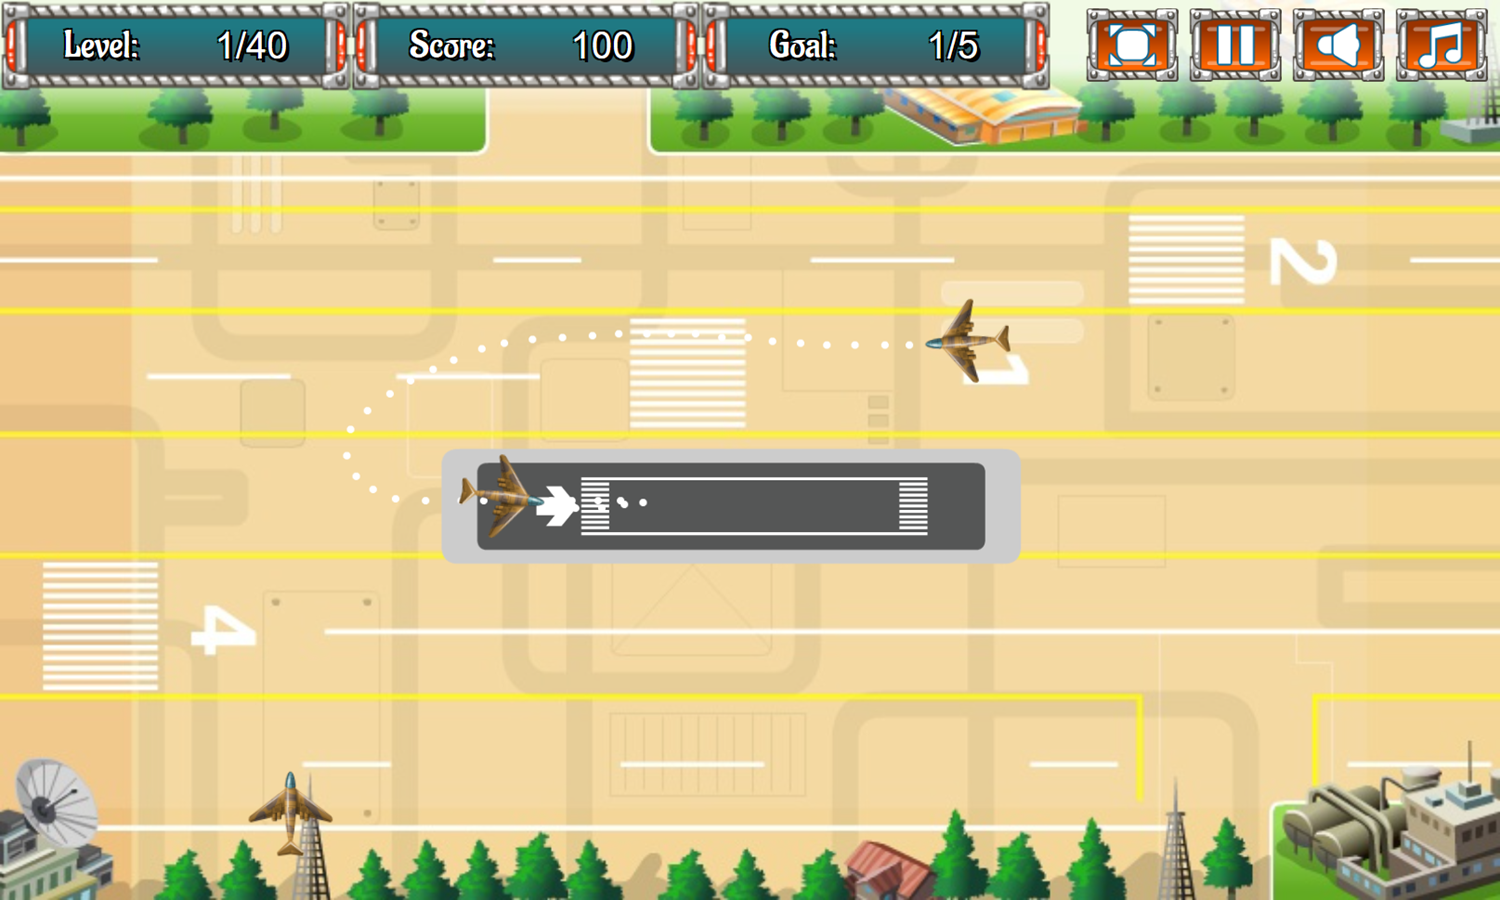 Airport Management 2 Game Level Play Screenshot.